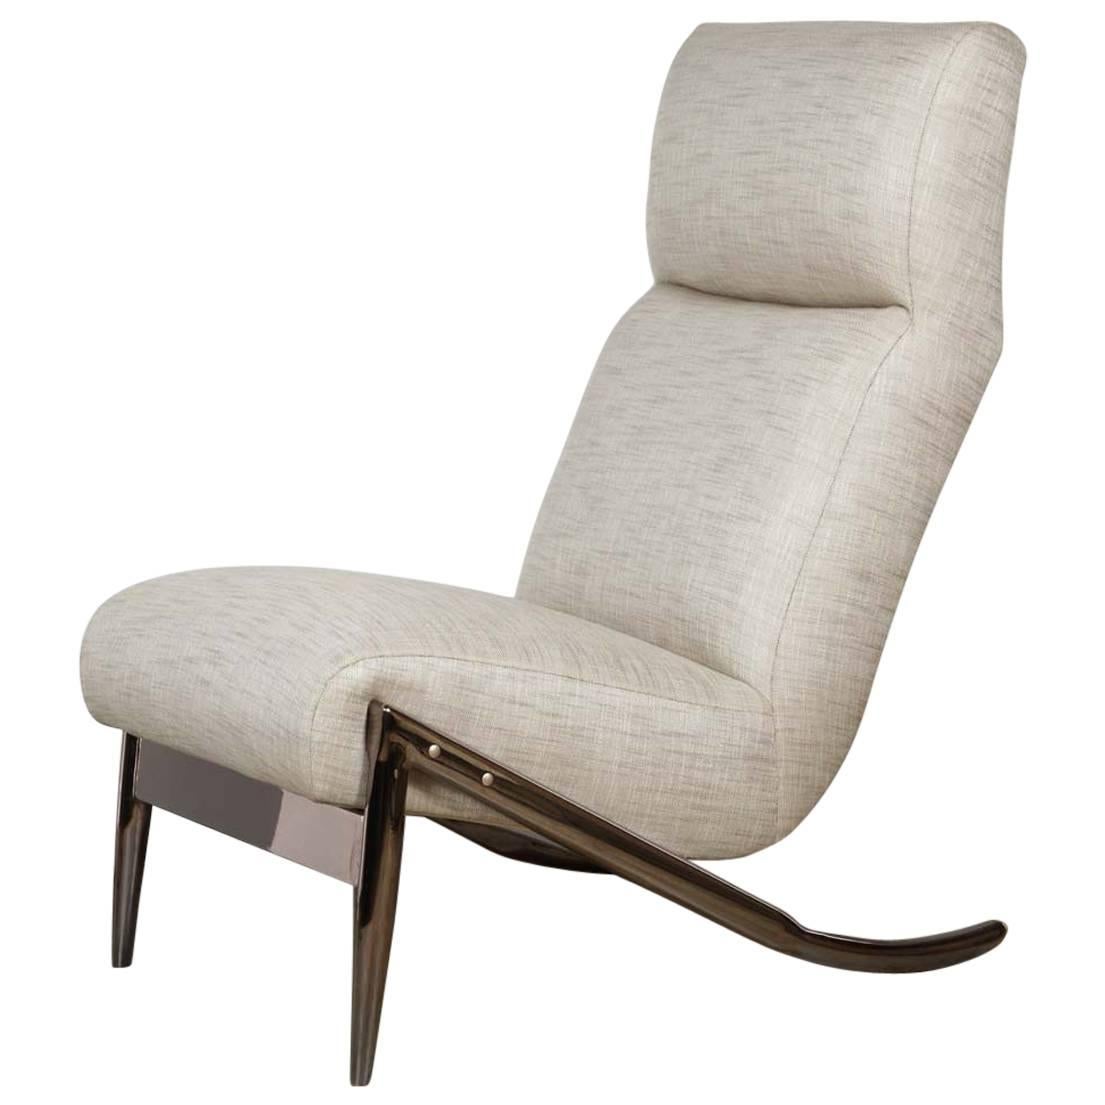 Paul Marra Slipper Chair in Black Nickel with Linen